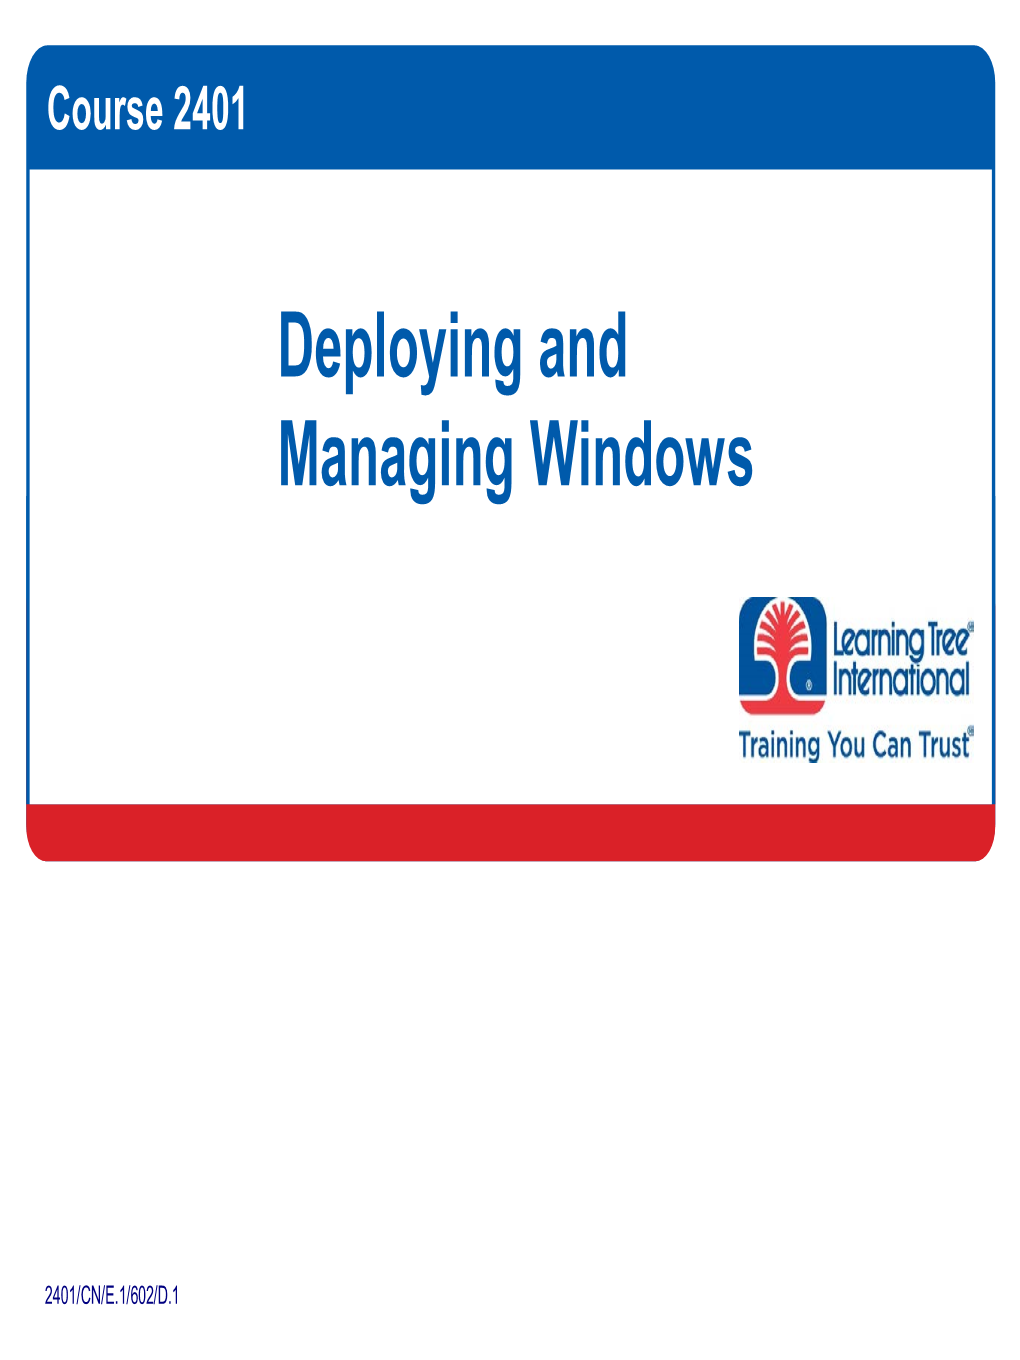 Deploying and Managing Windows